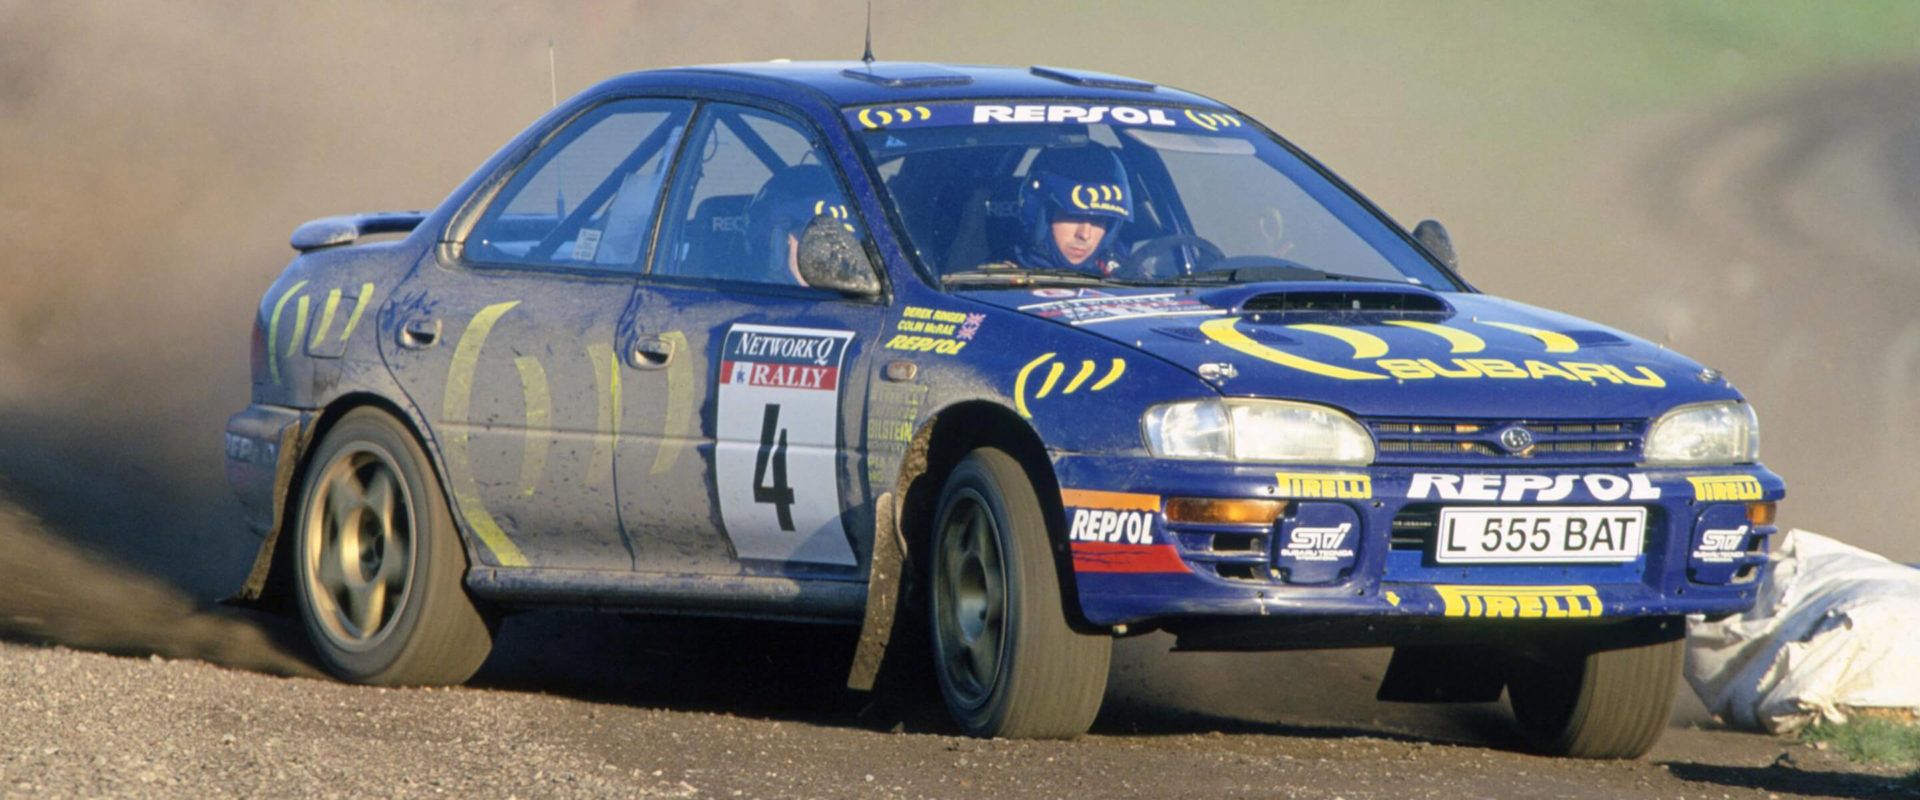 1995_WRC_ColinMcRae_RallyGB-from-Ferdi_2880x1200 Via-Subaru